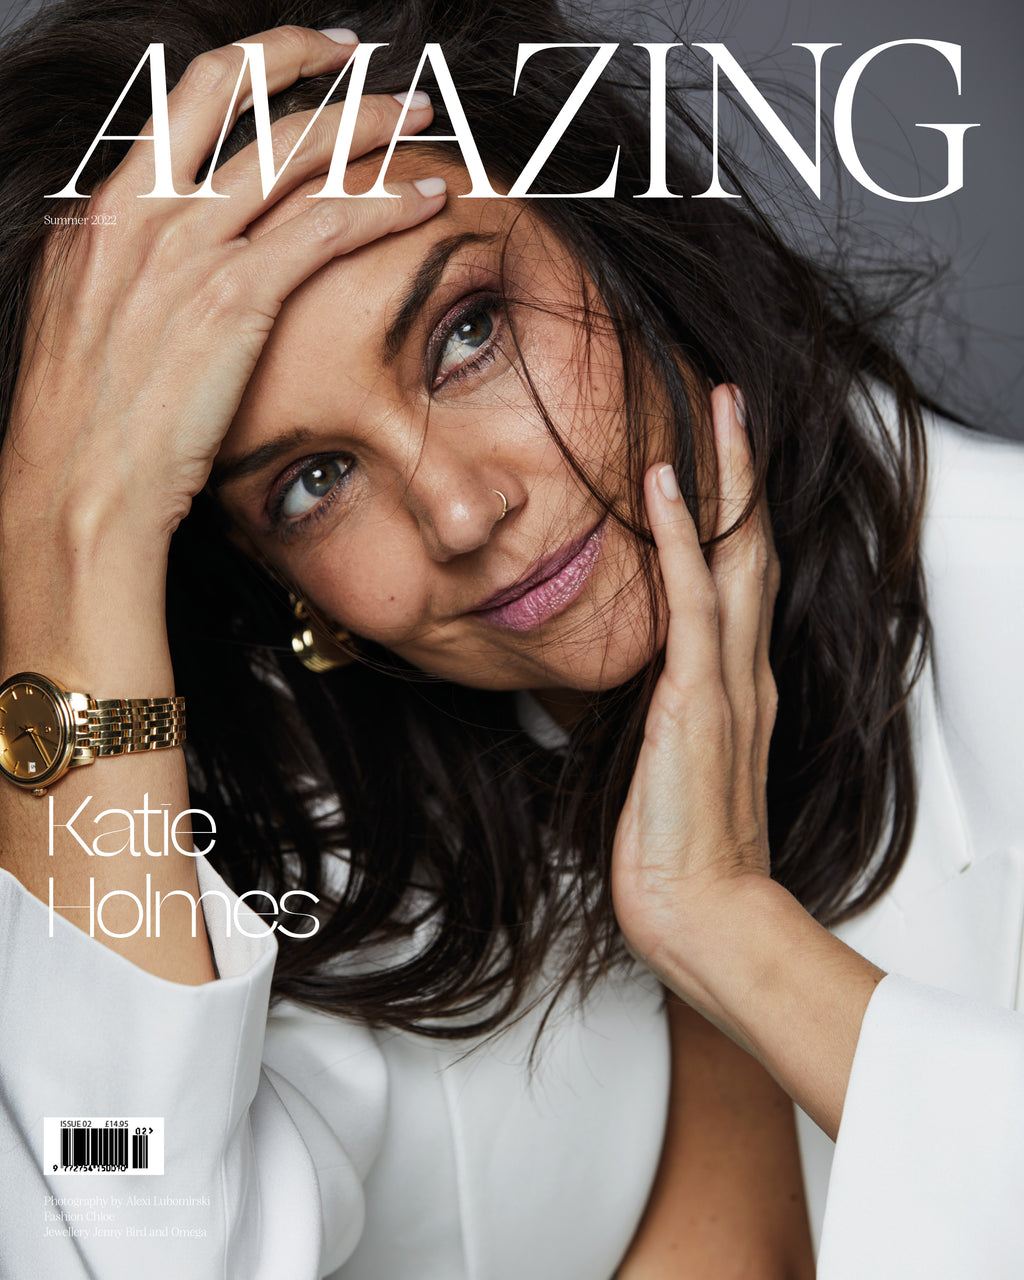 Issue 2 – theamazingmagazine